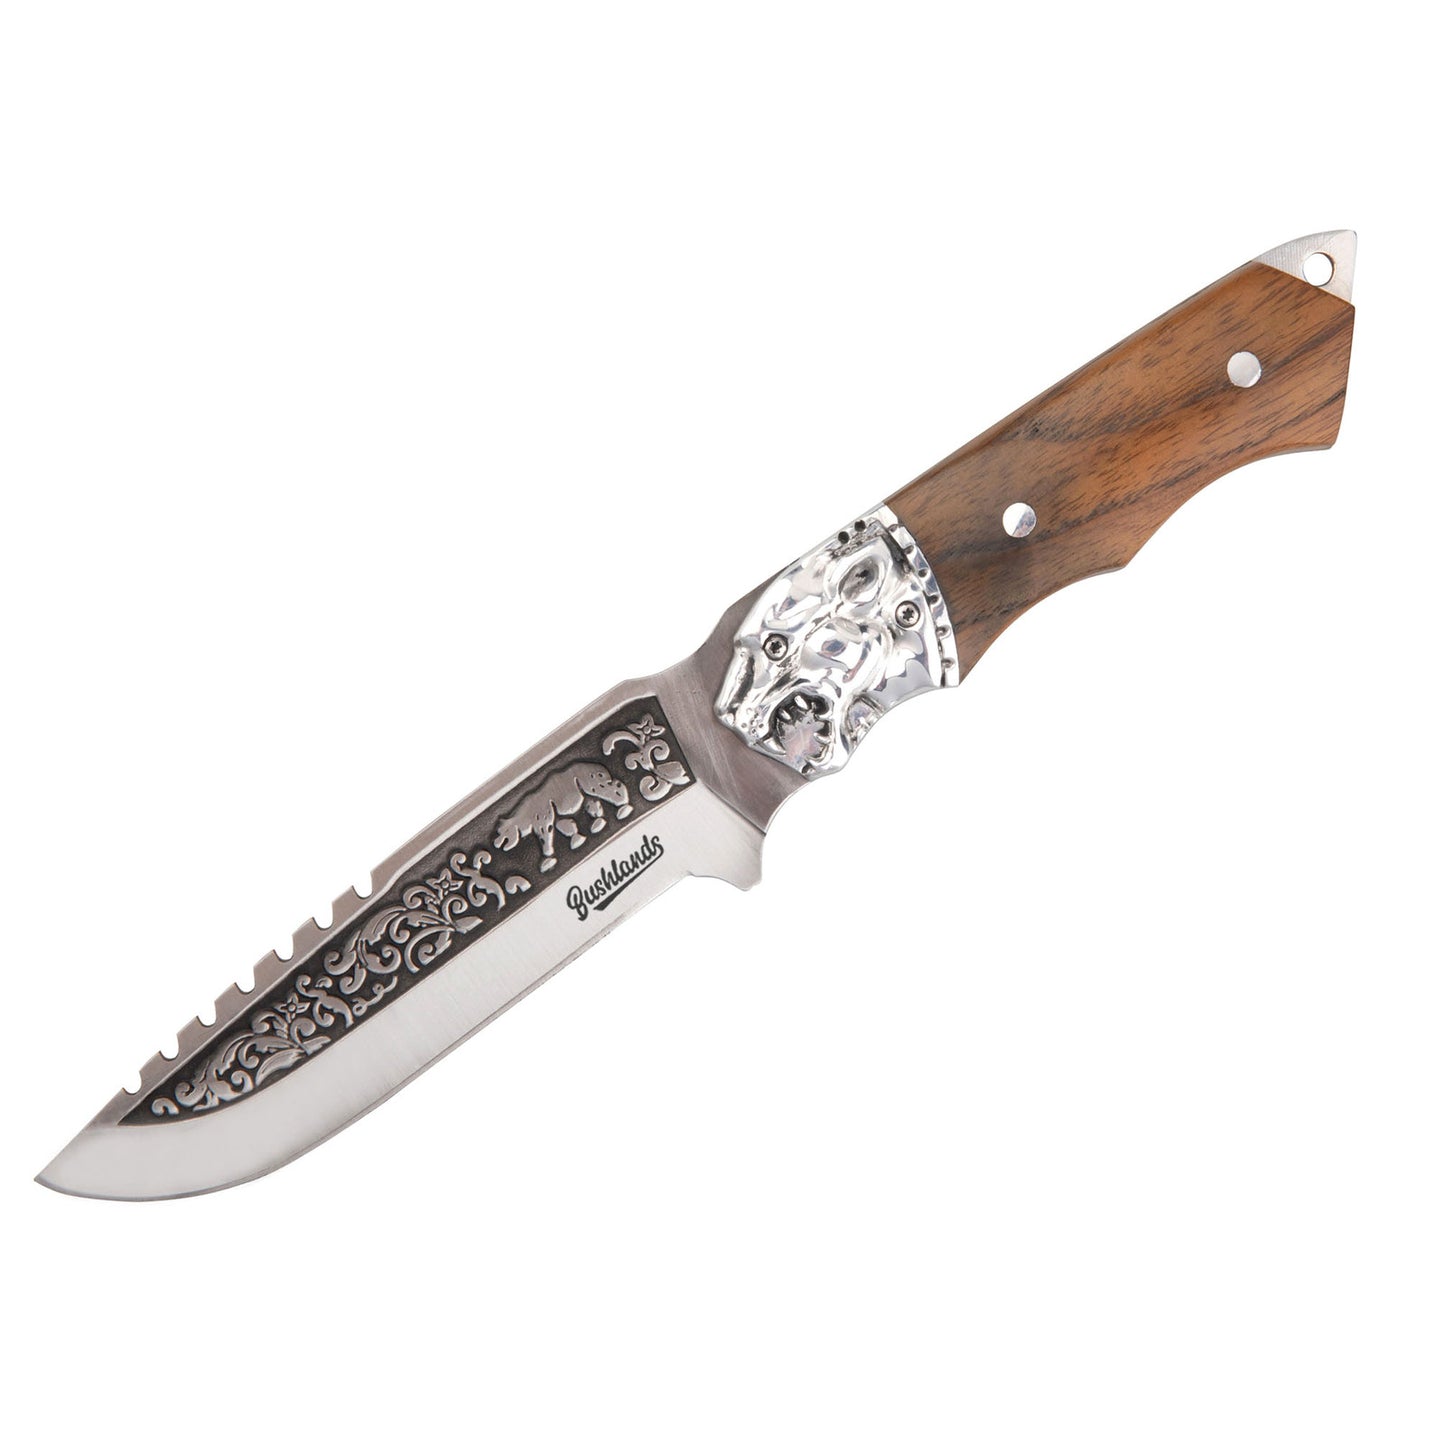 Bushlands Bushlands Fix Blade Hunting Knife 5.5 Inch Coated Blade - With Polished Pakkawood Handle #1575 Dim Gray